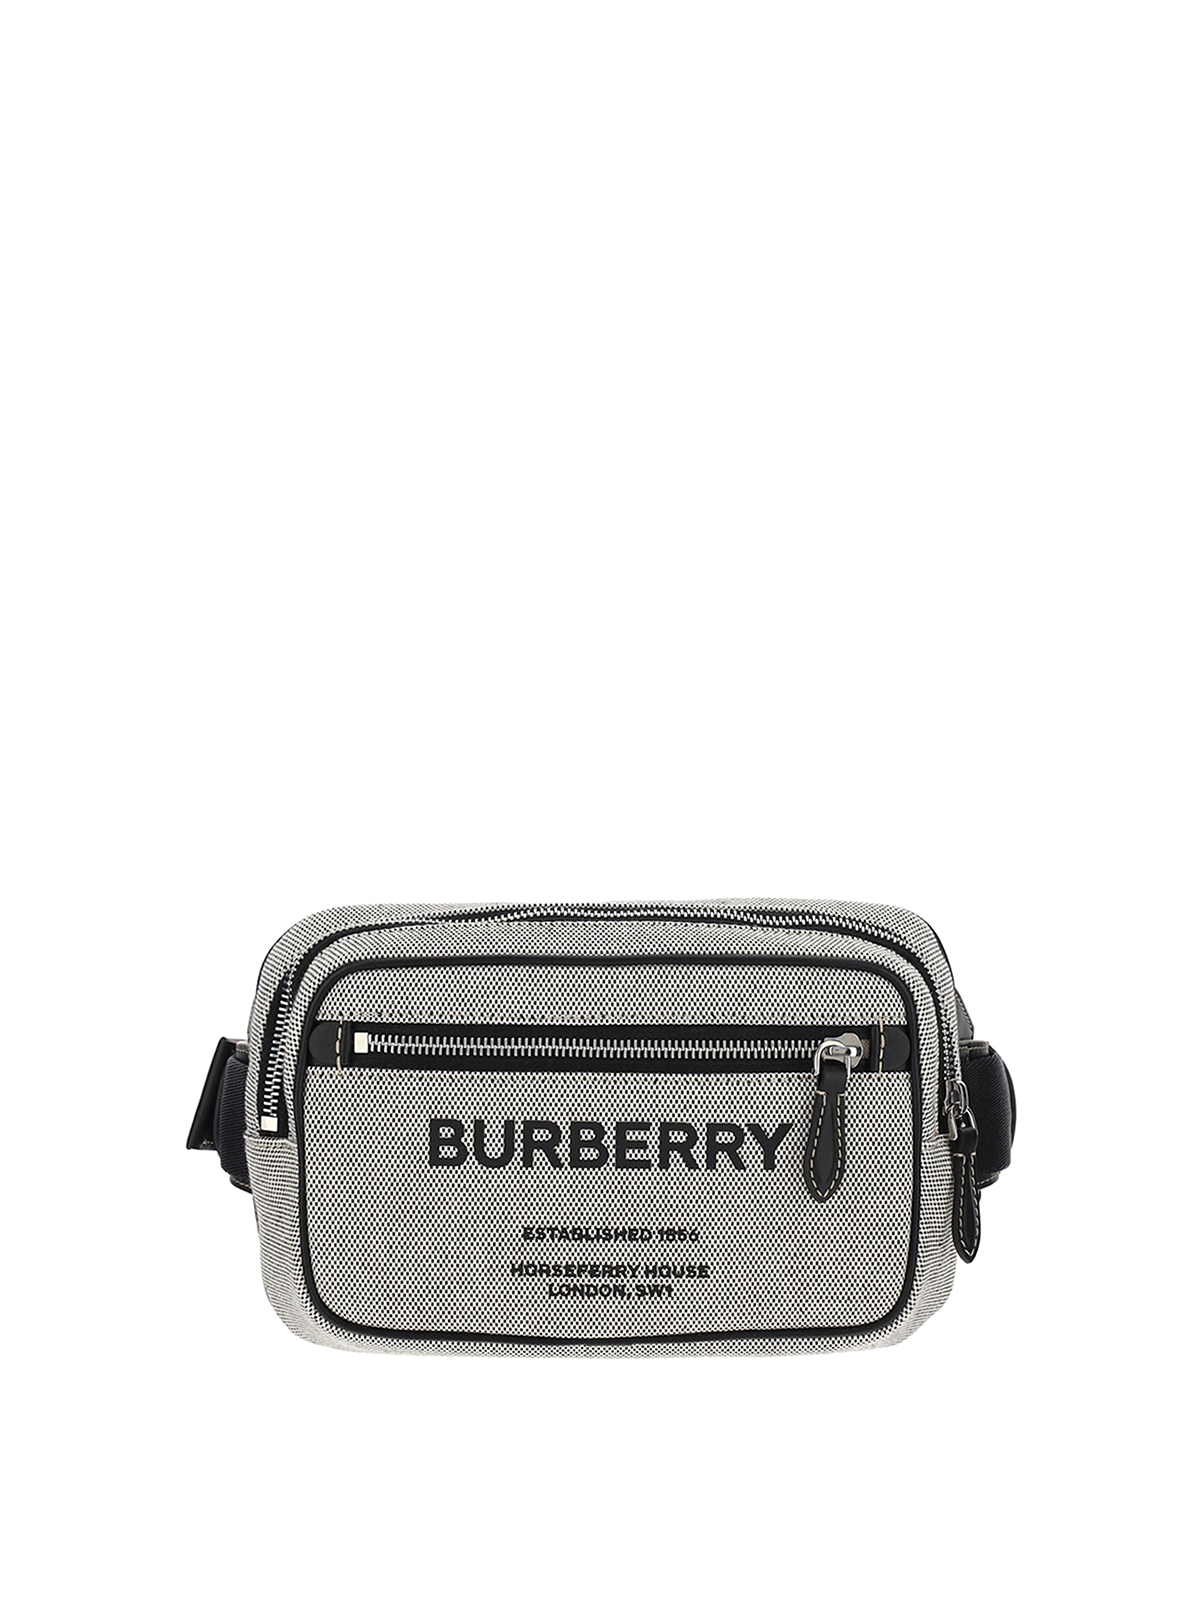 Burberry India, Burberry Bags India